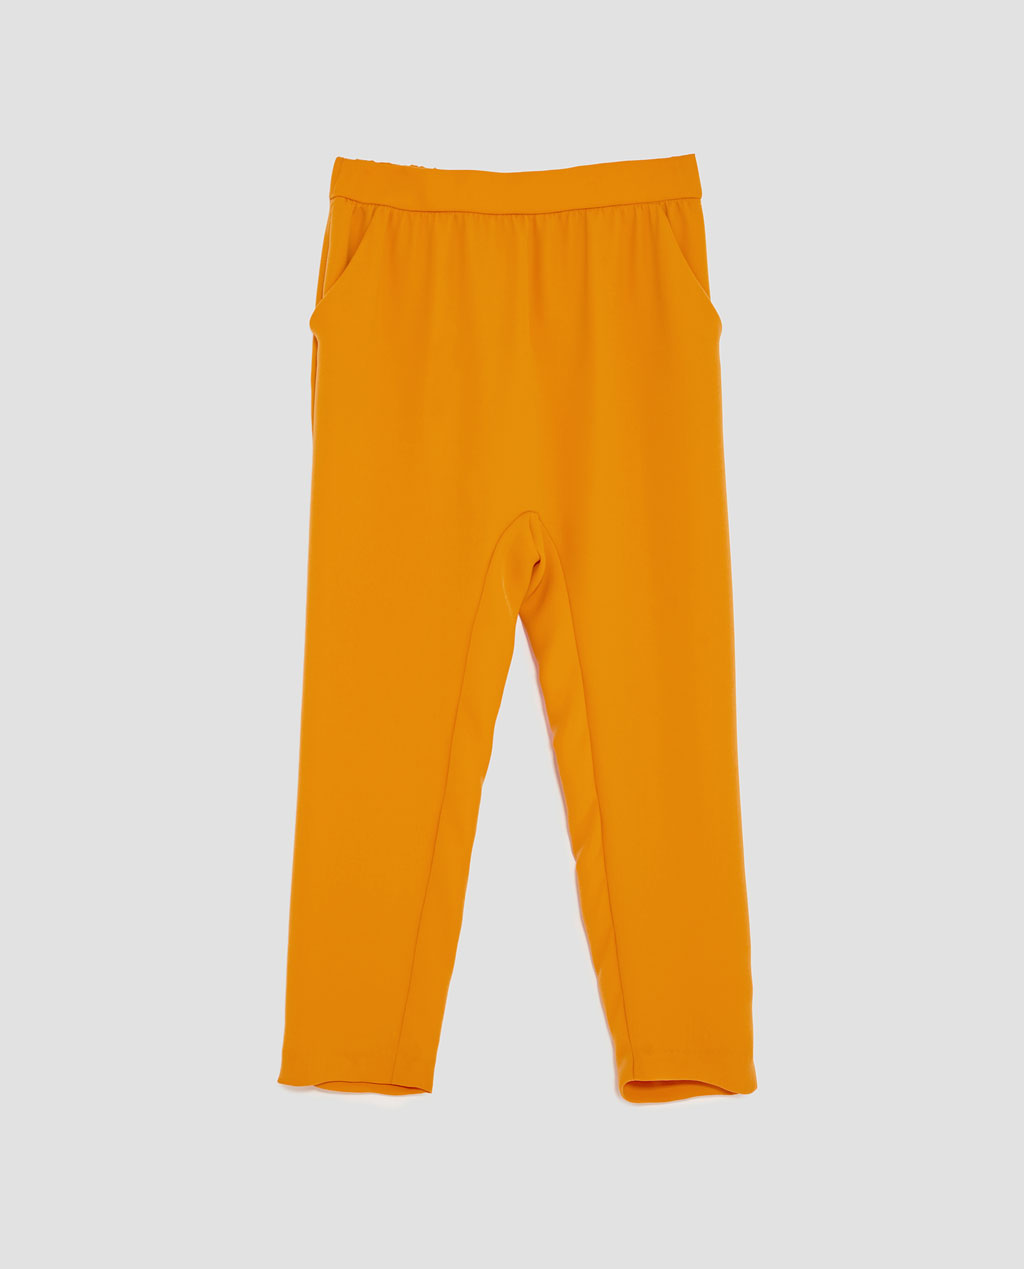 Игра желтые штаны. 6415-80 Штаны Zara. Желтые брюки Zara. Zara оранжевые брюки.